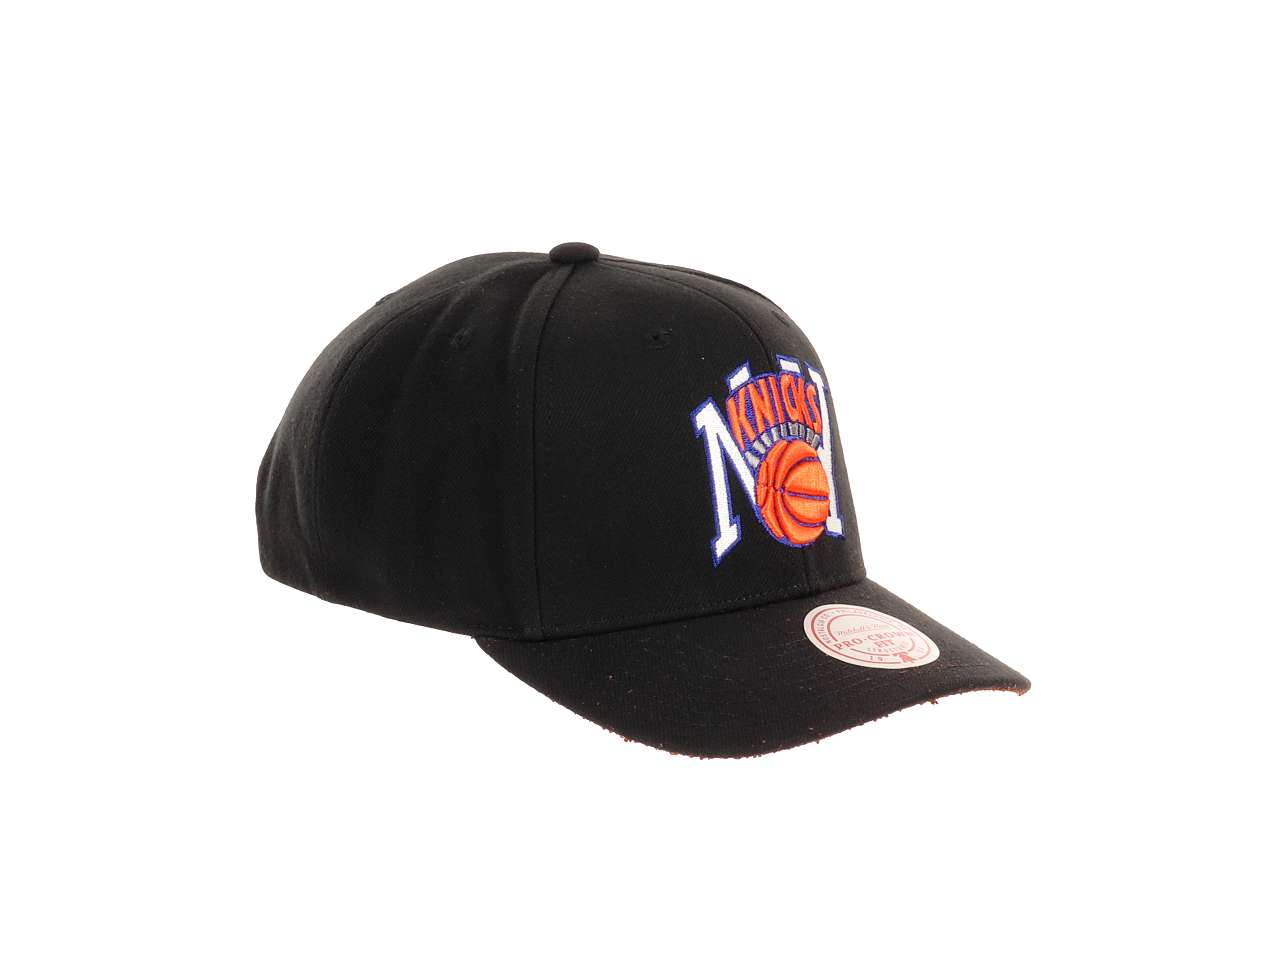 New York Knicks NBA Icon Grail Pro Snapback Hardwood Claasic Cap Pro Crown Fit Black Mitchell & Ness